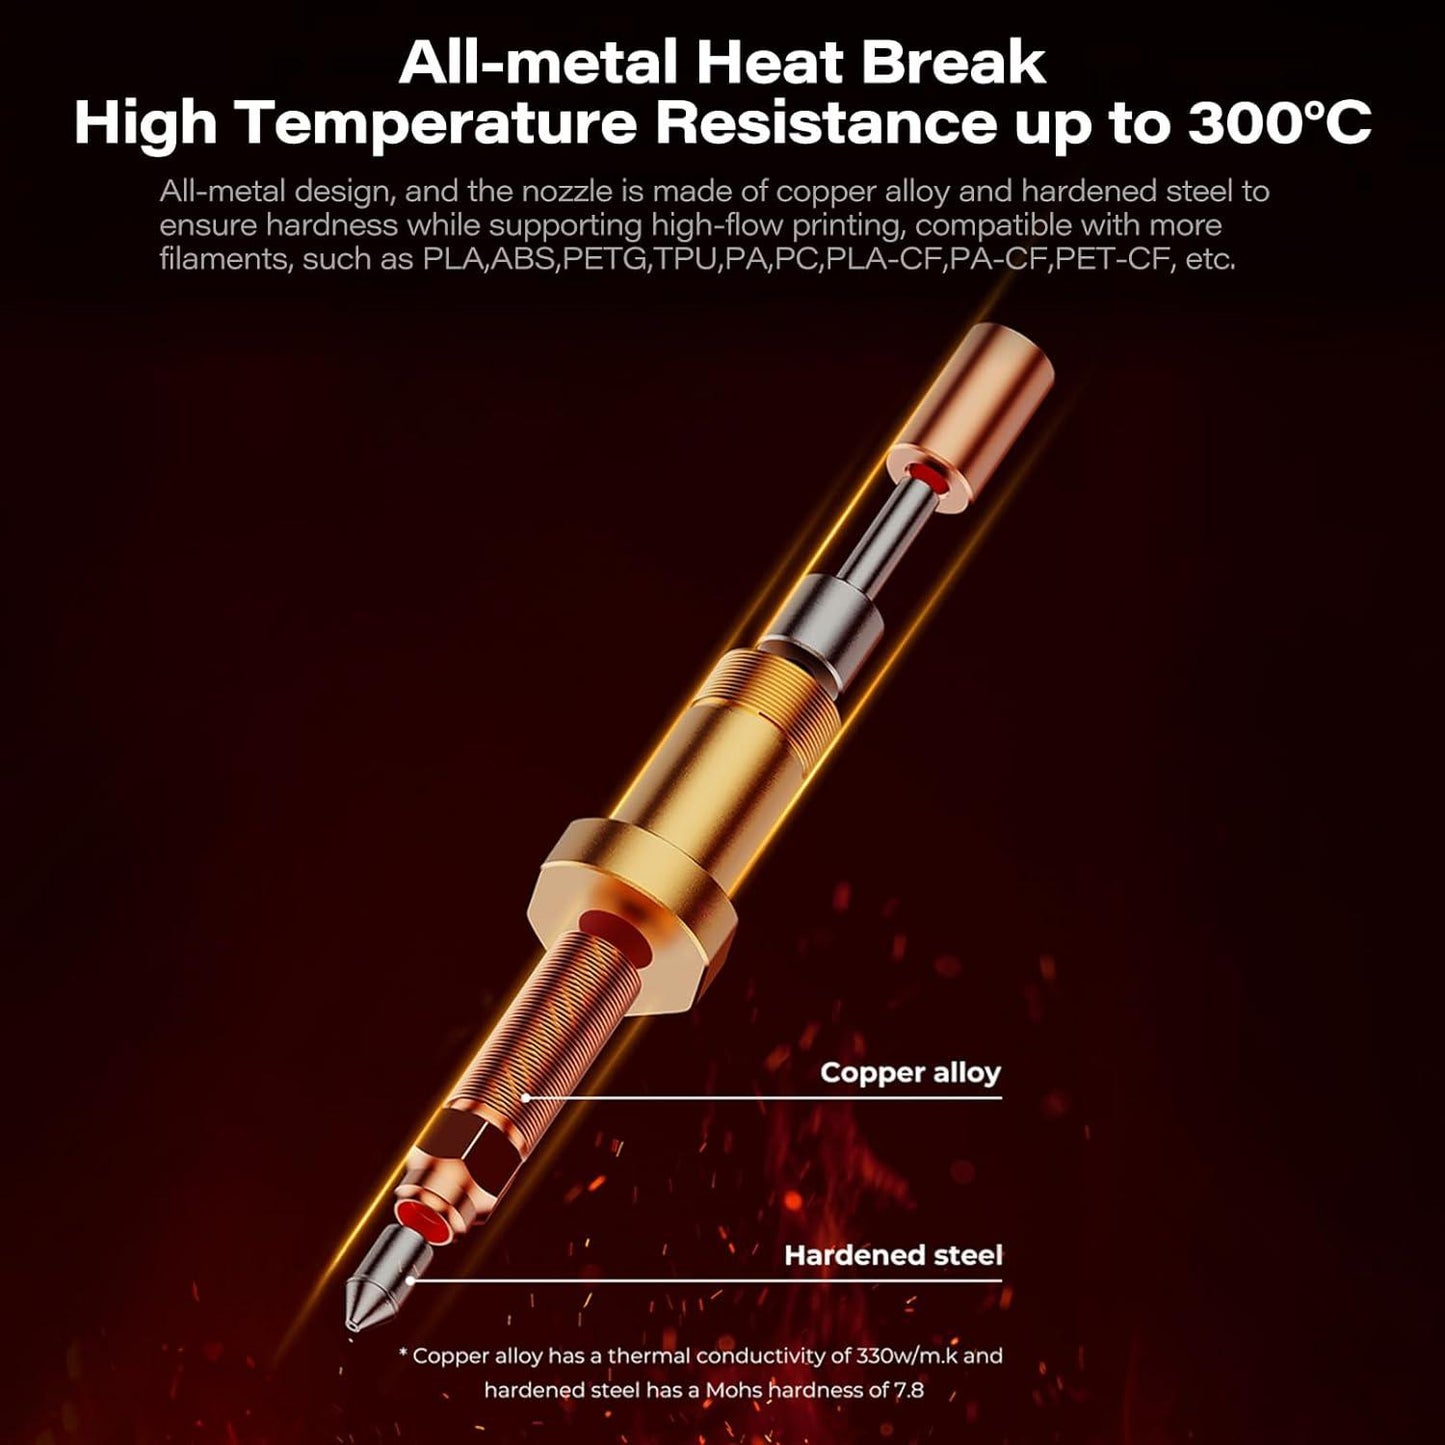 CREALITY K1 / K1 Max Upgrade Ceramic Heating Block Kit, High Temperature and High-Speed - product details all metal heat break - b.savvi